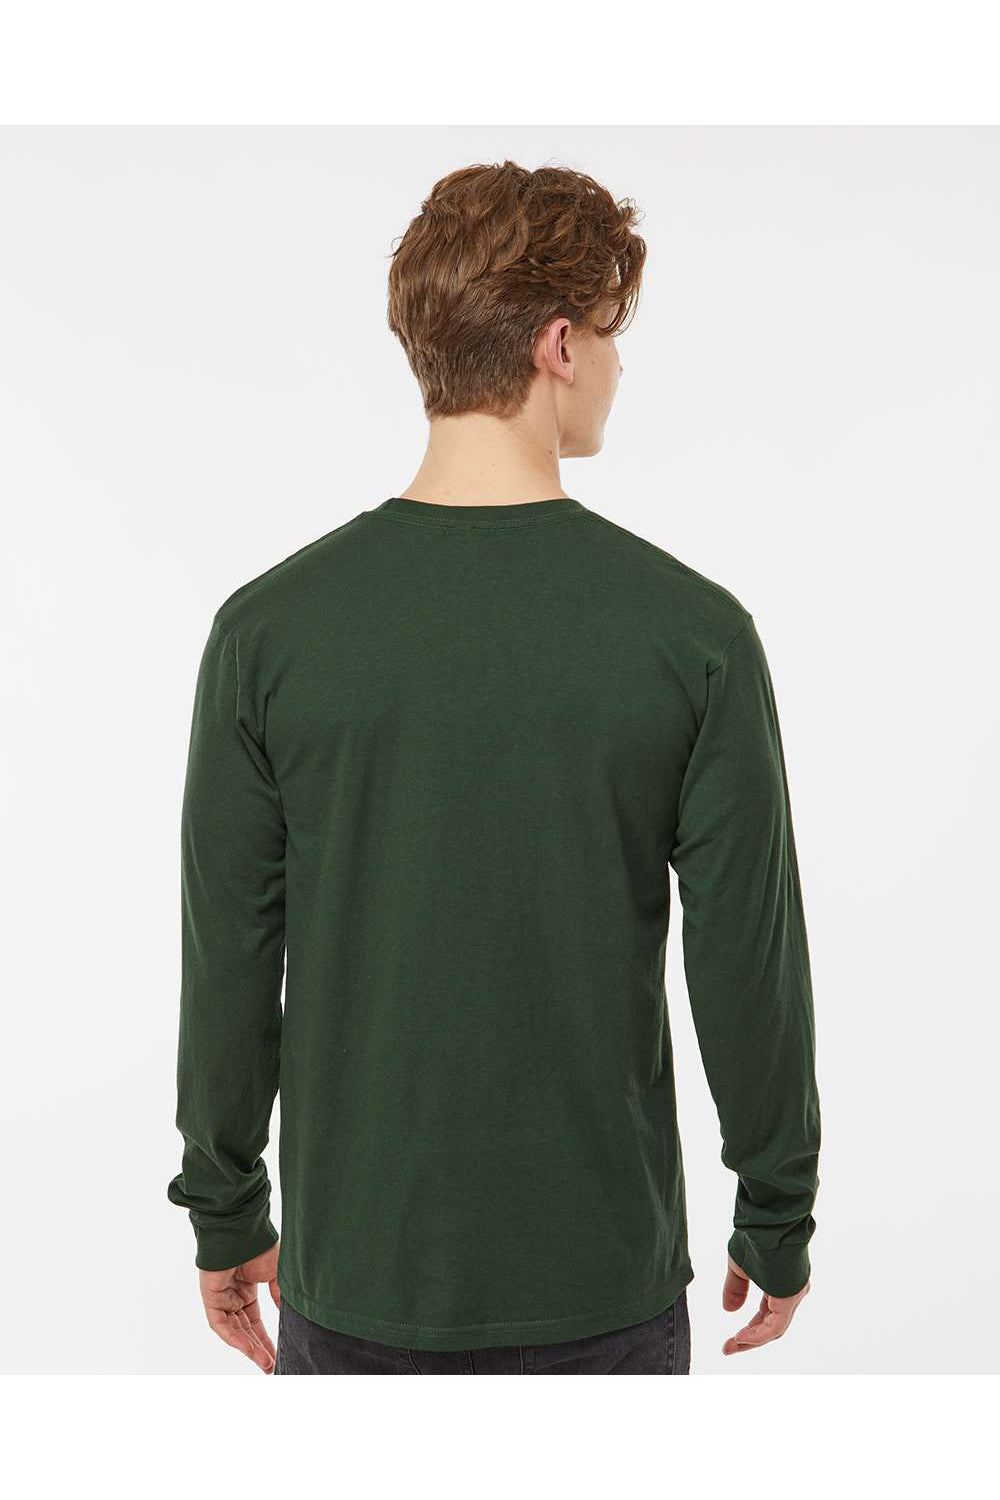 Tultex 291 Mens Jersey Long Sleeve Crewneck T-Shirt Hunter Green Model Back